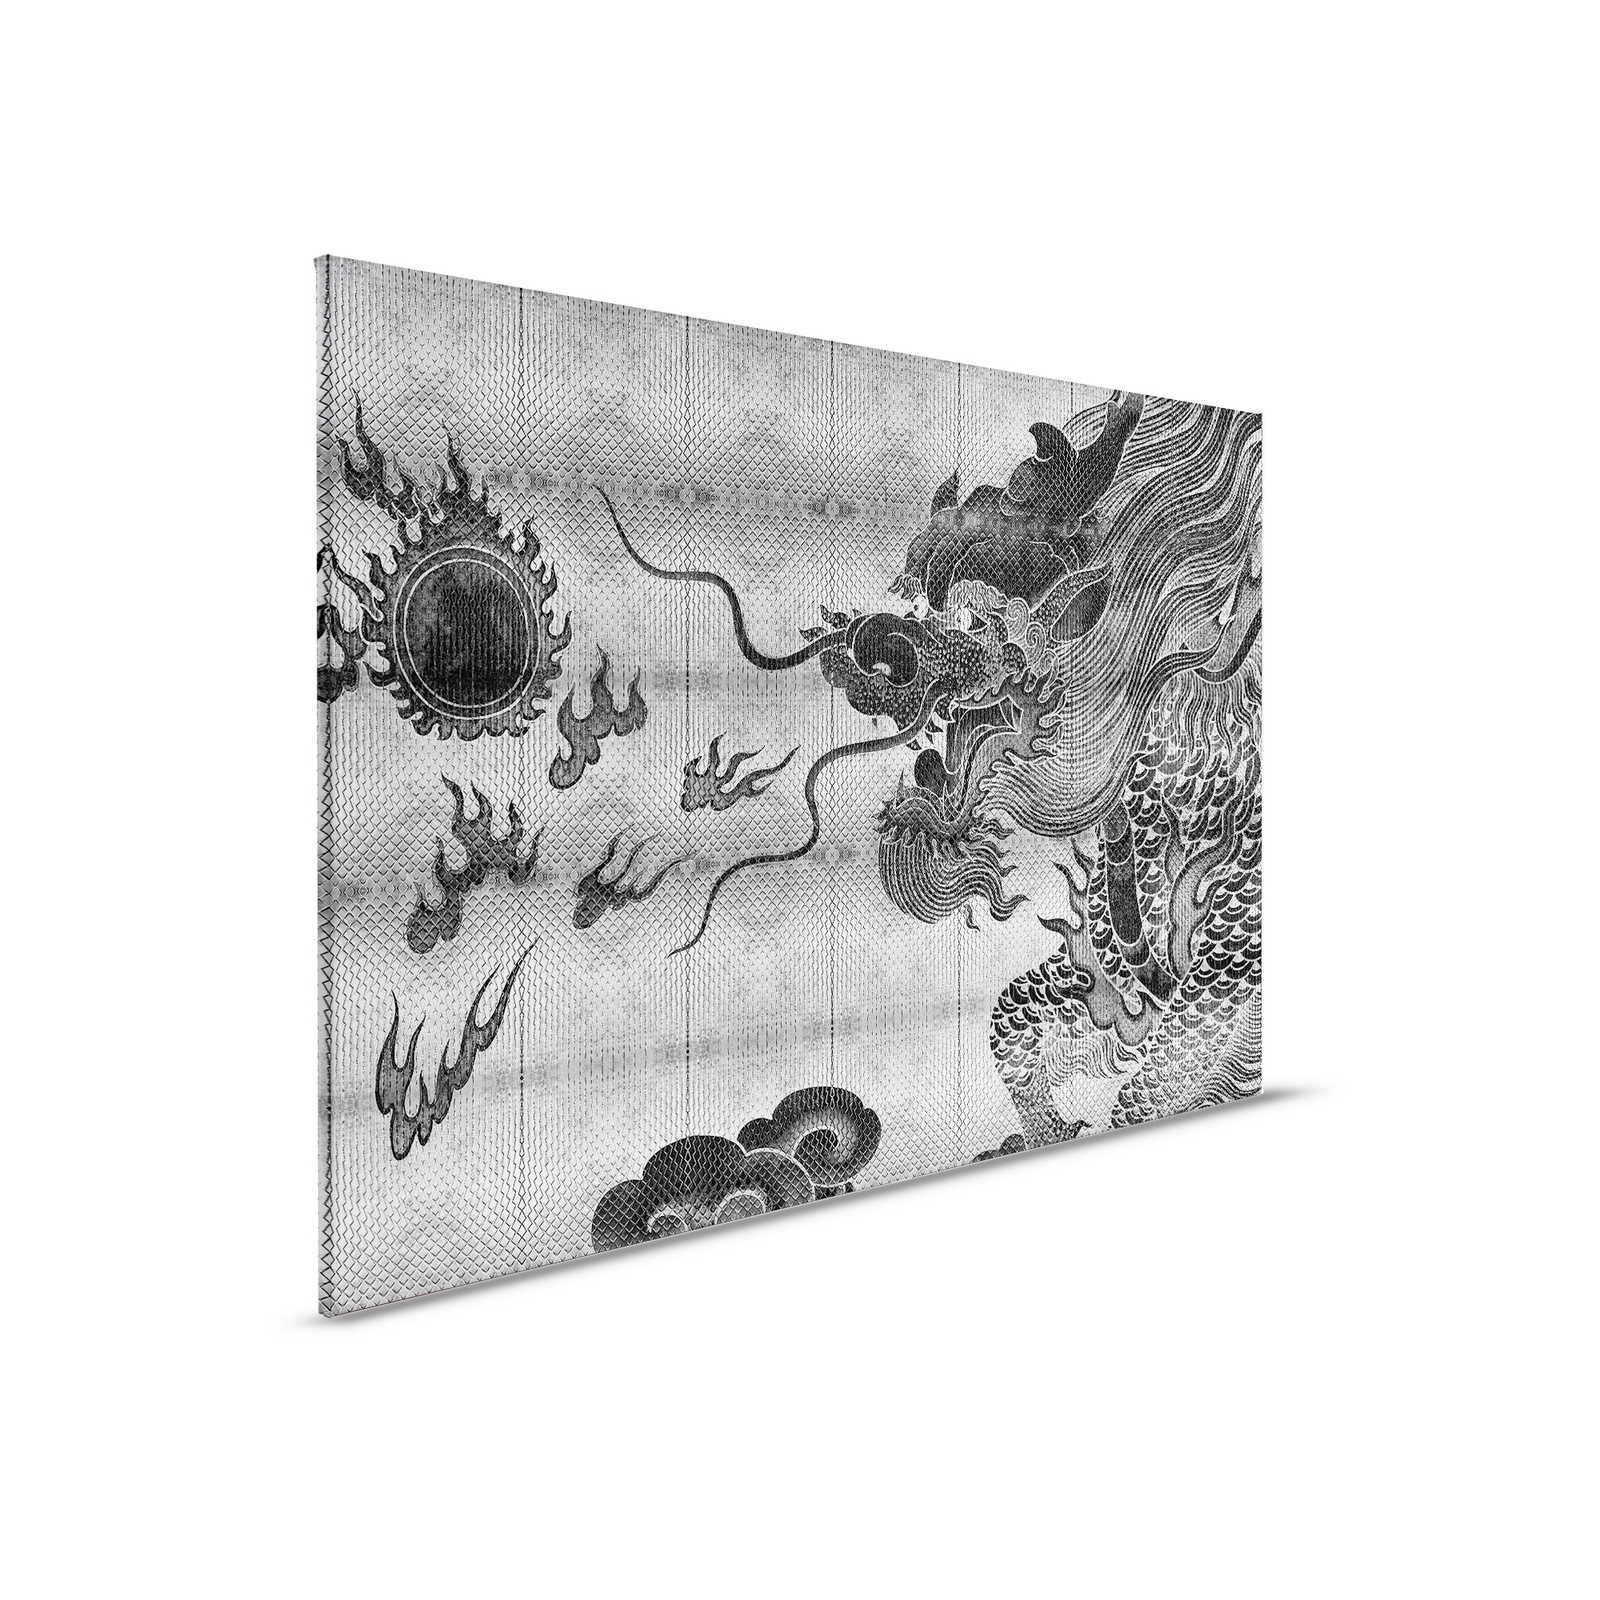 Shenzen 3 - Dragon Canvas Painting Metallic Silver Asian Style - 0.90 m x 0.60 m
